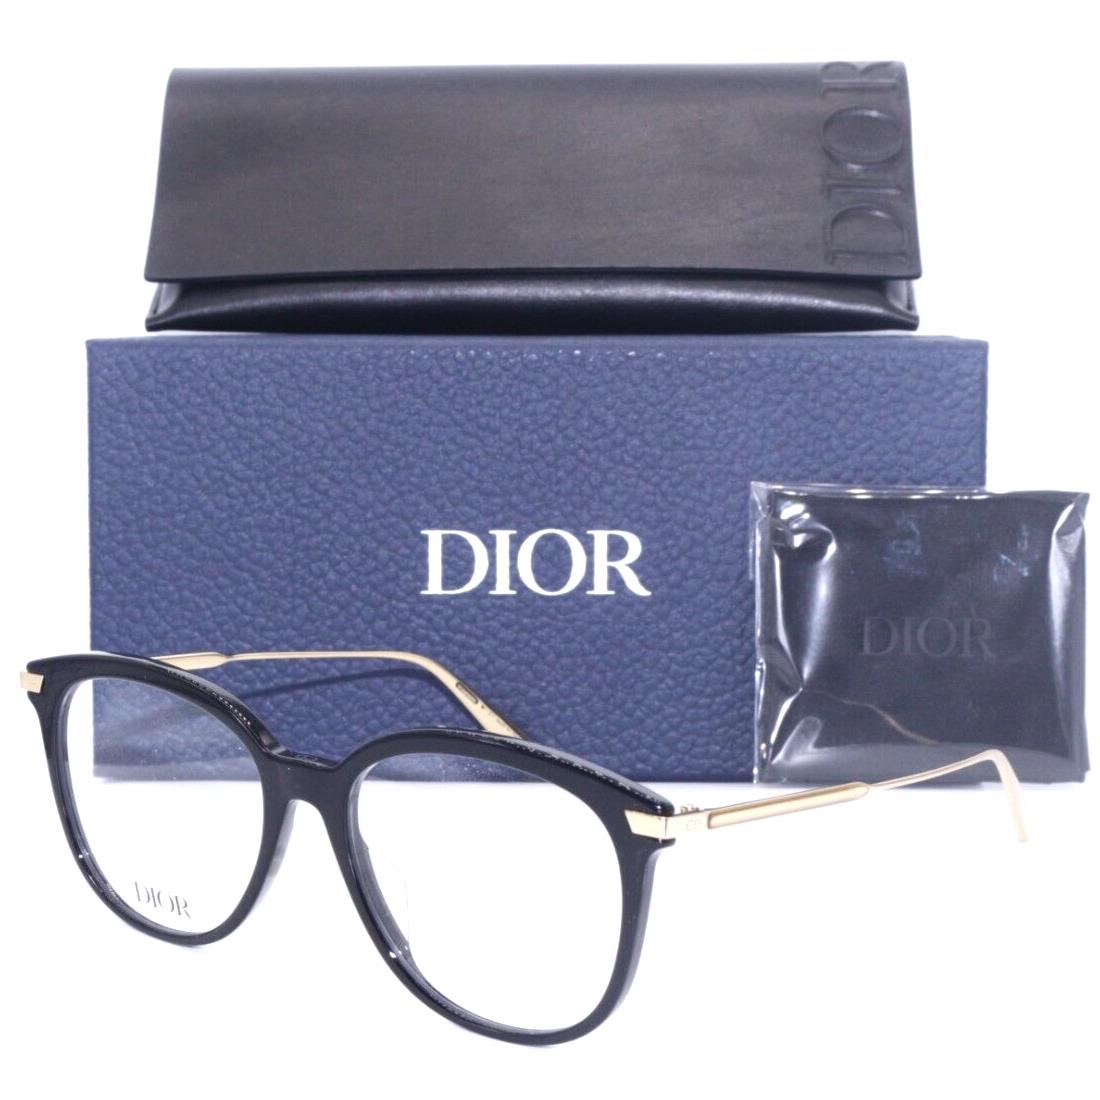 Christian Dior Gemdioro R5I 1200 Black Gold Eyeglasses 54-17